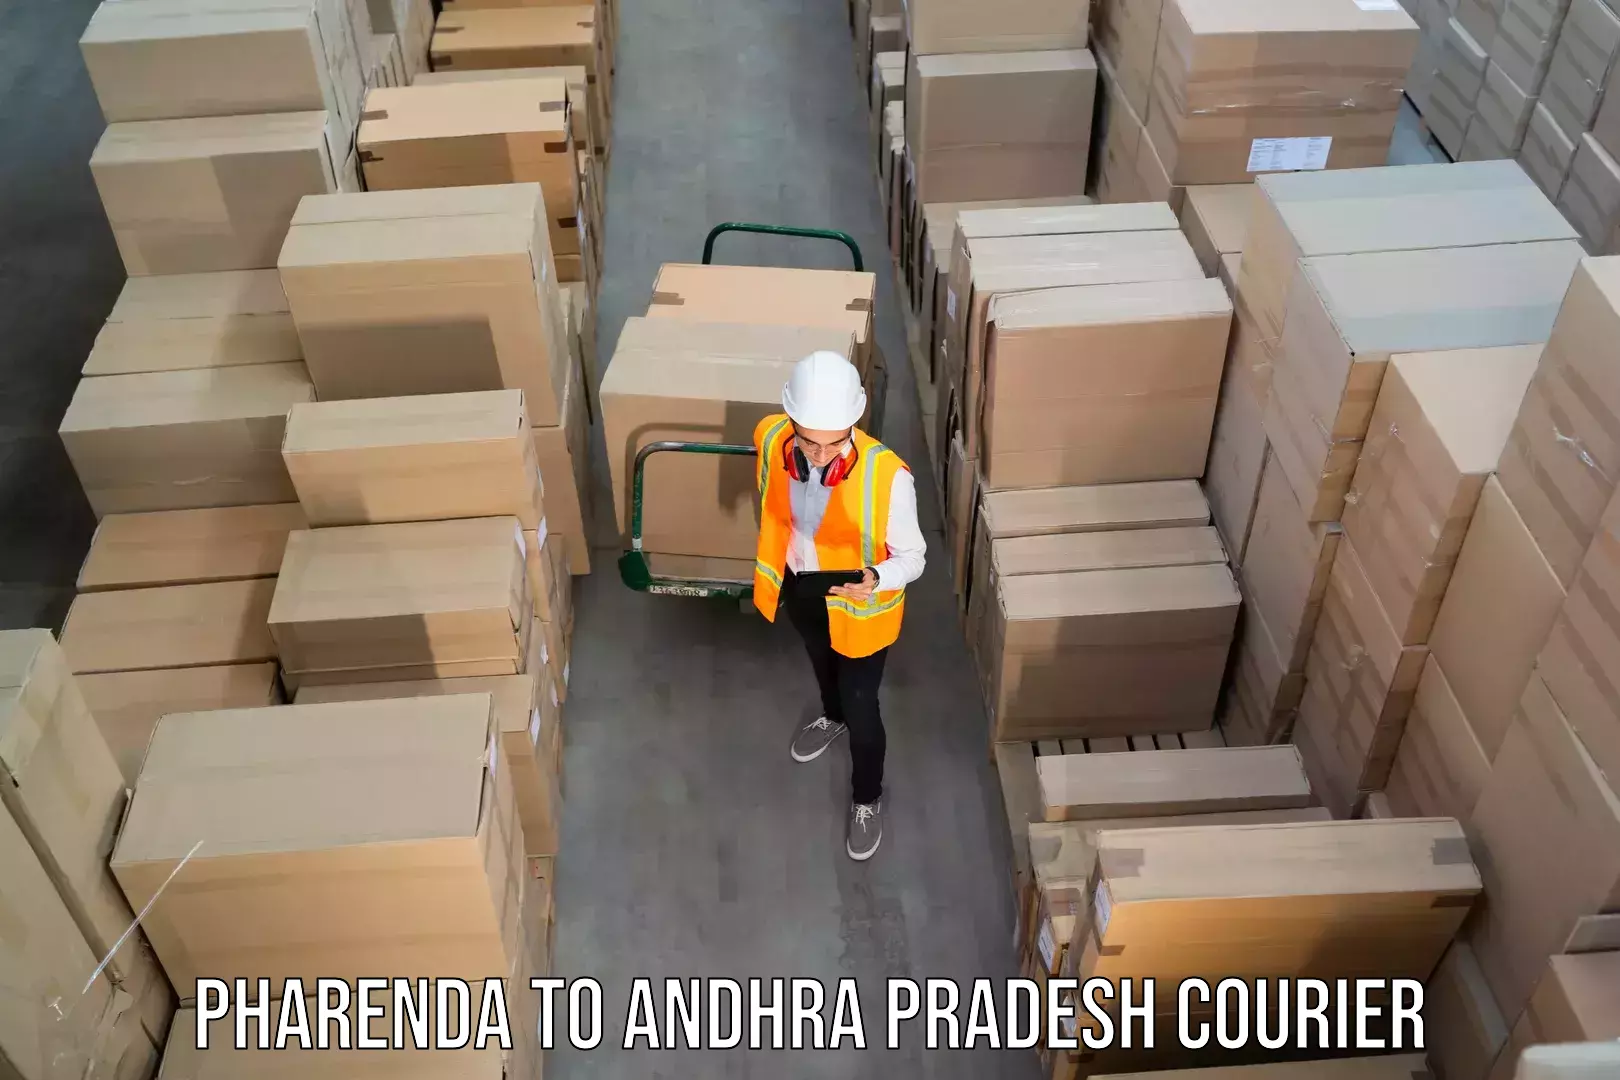 Courier service innovation in Pharenda to Kuppam